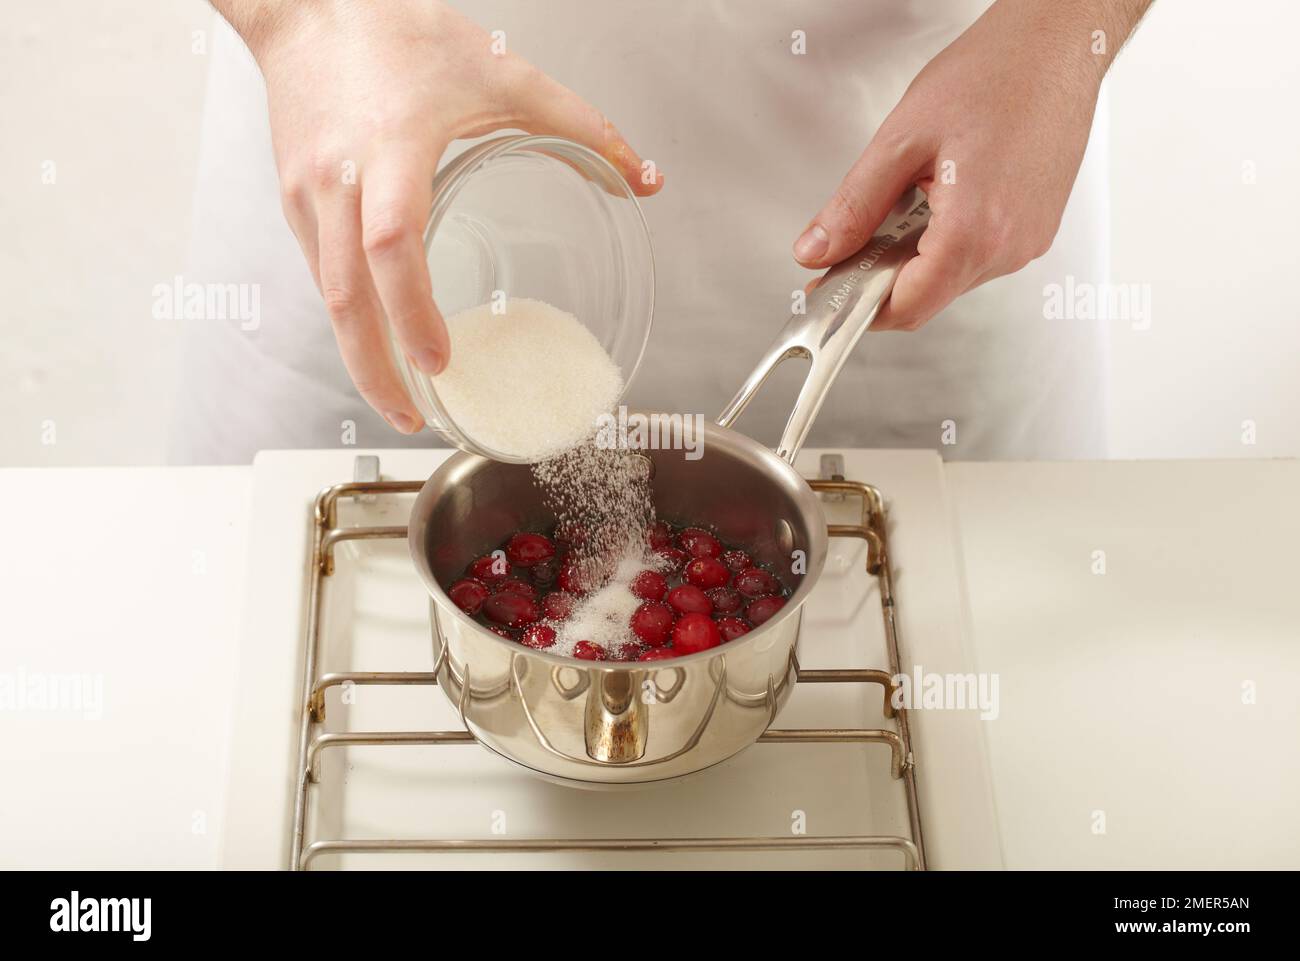 Adding sugar to saucepan of cranberries Stock Photo